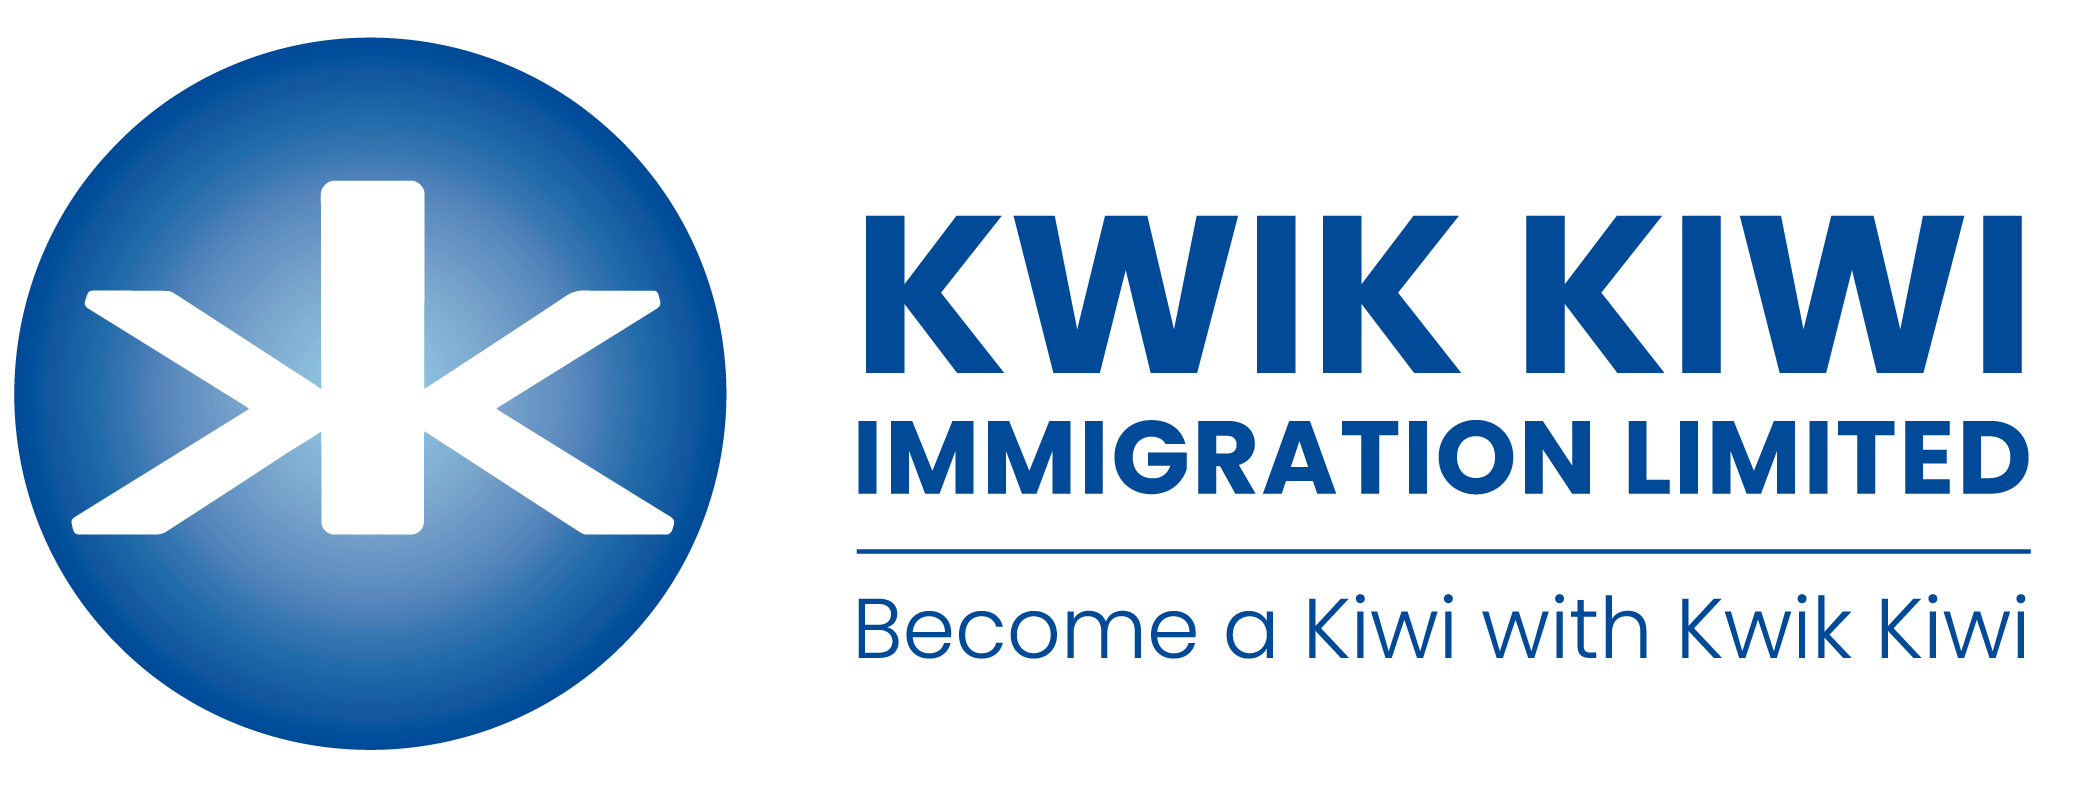 Kwik Kiwi immigration